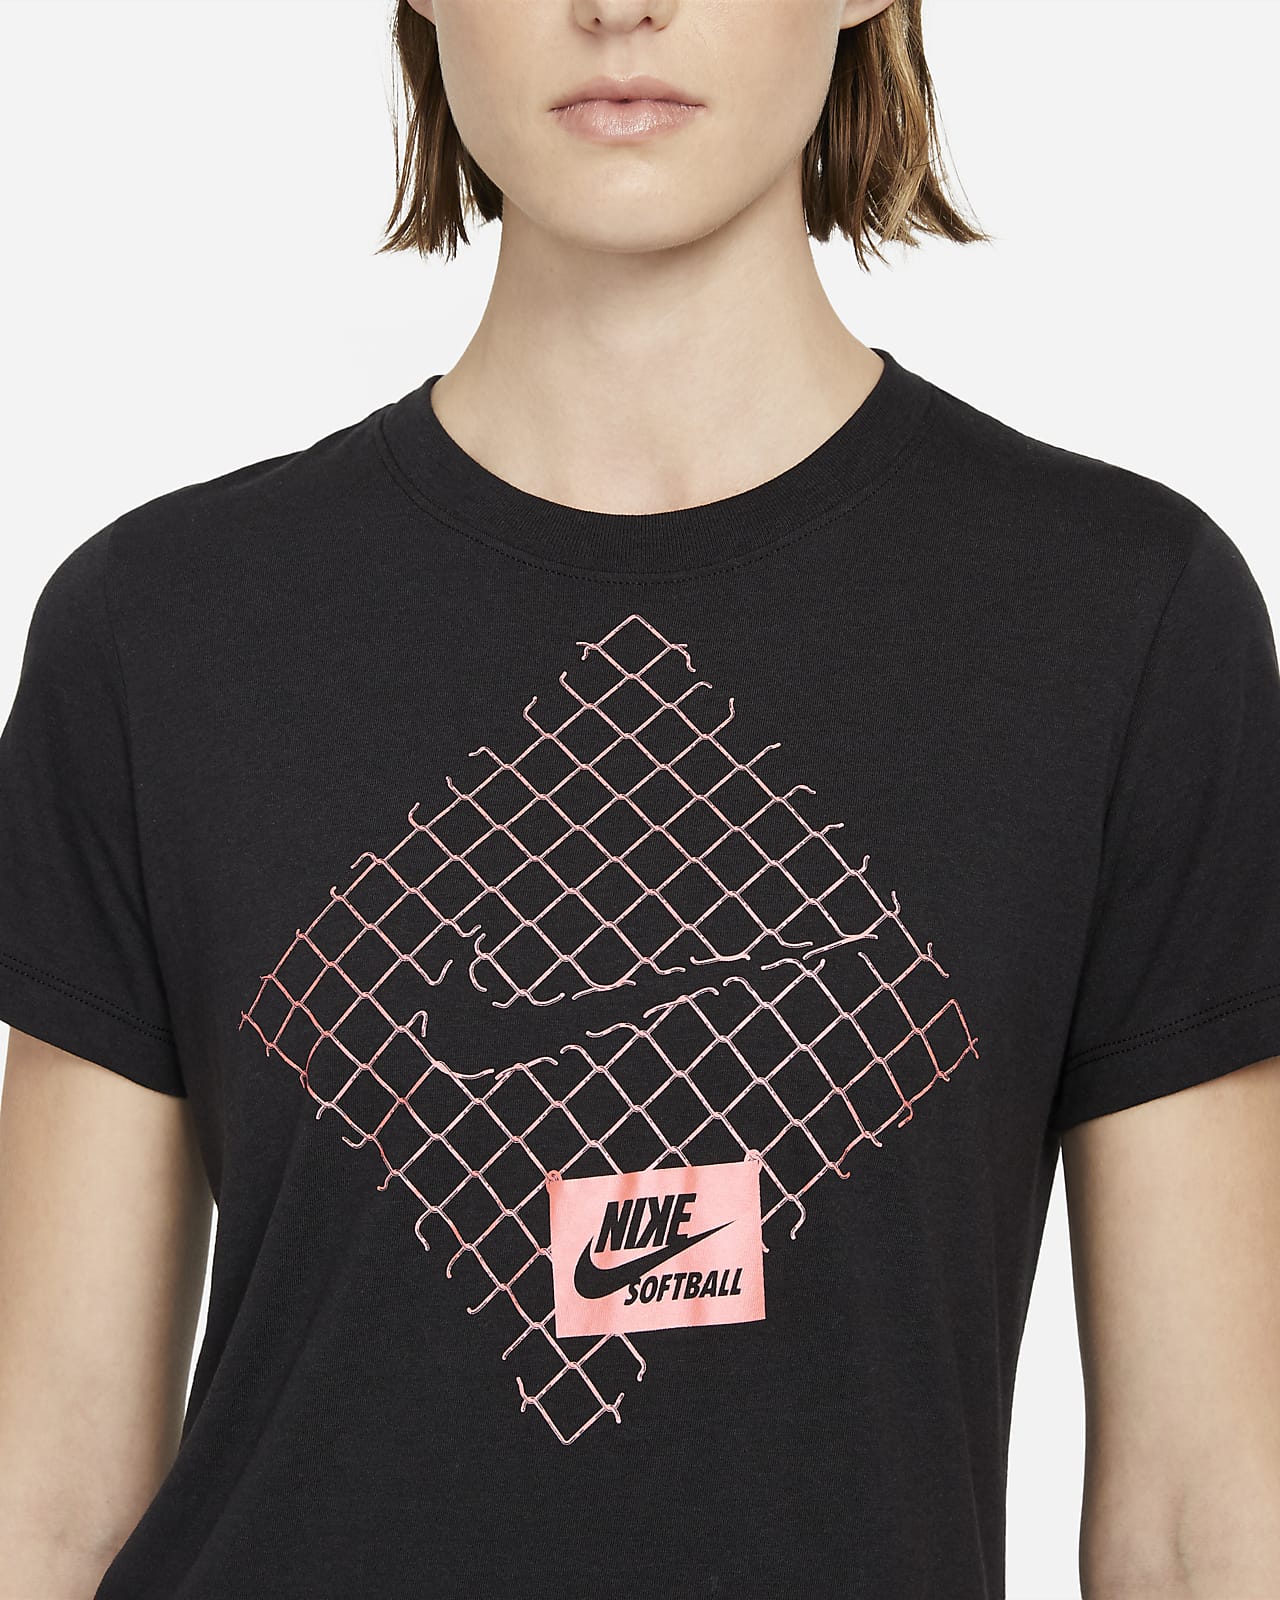 Nike Women's Softball T-Shirt. Nike.com